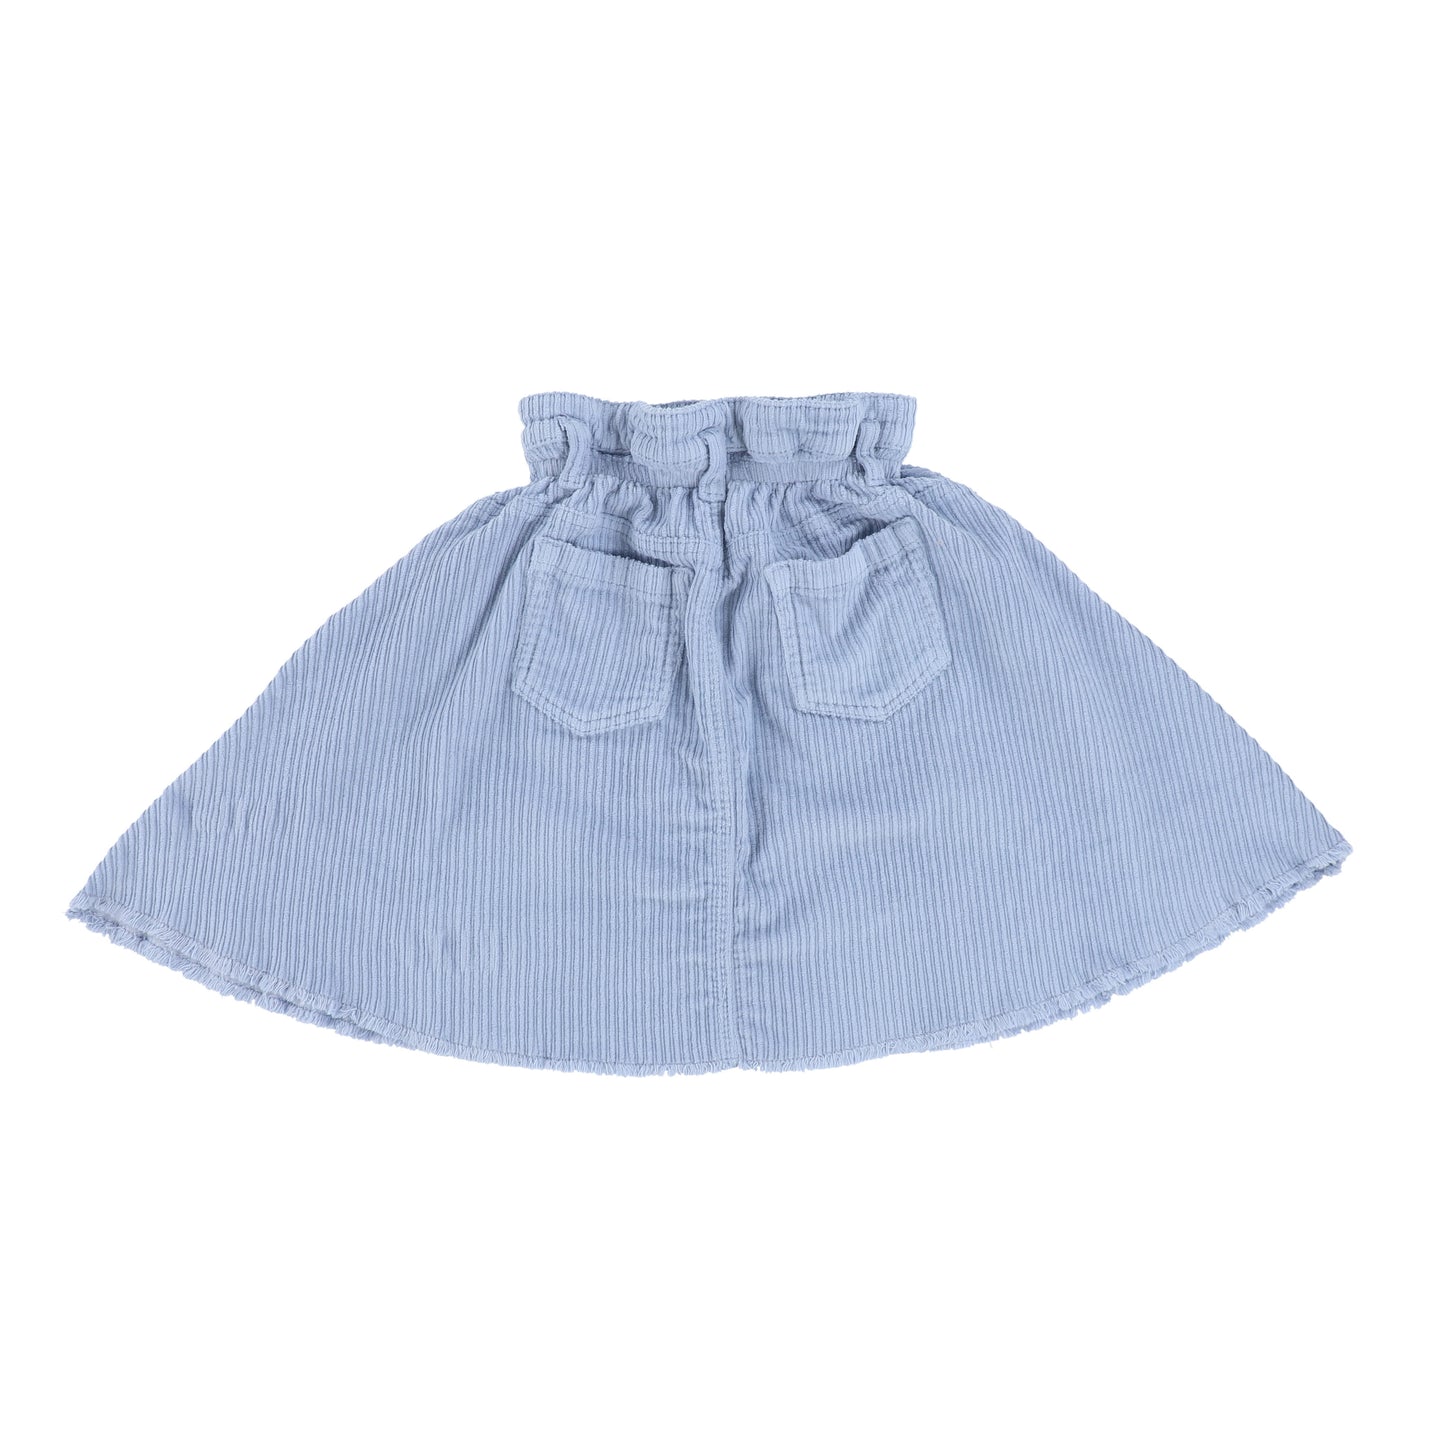 Dixie Pastel Blue Corduroy Pocket Skirt [Final Sale]